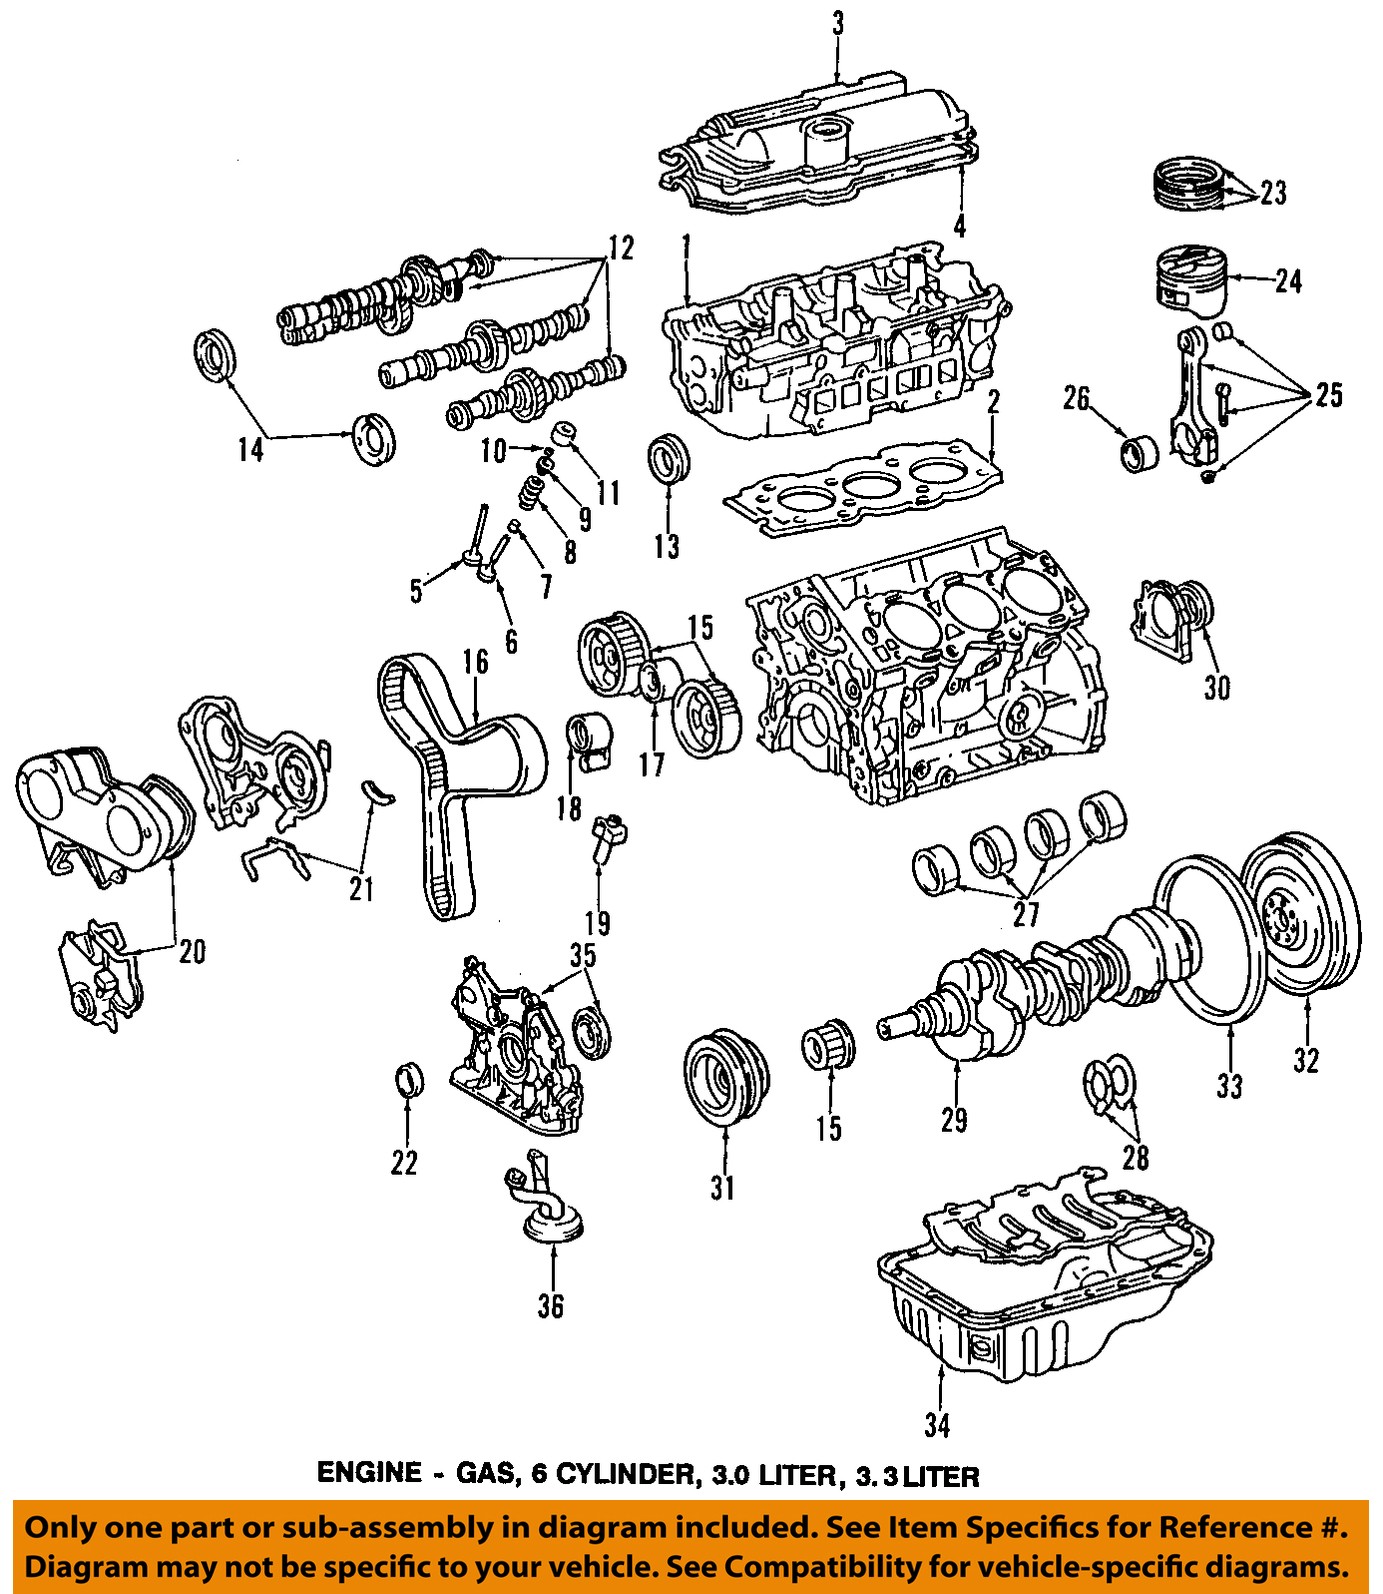 Toyota Camry 2000 Engine Diagram toyota Oem Valve Lifter Of Toyota Camry 2000 Engine Diagram